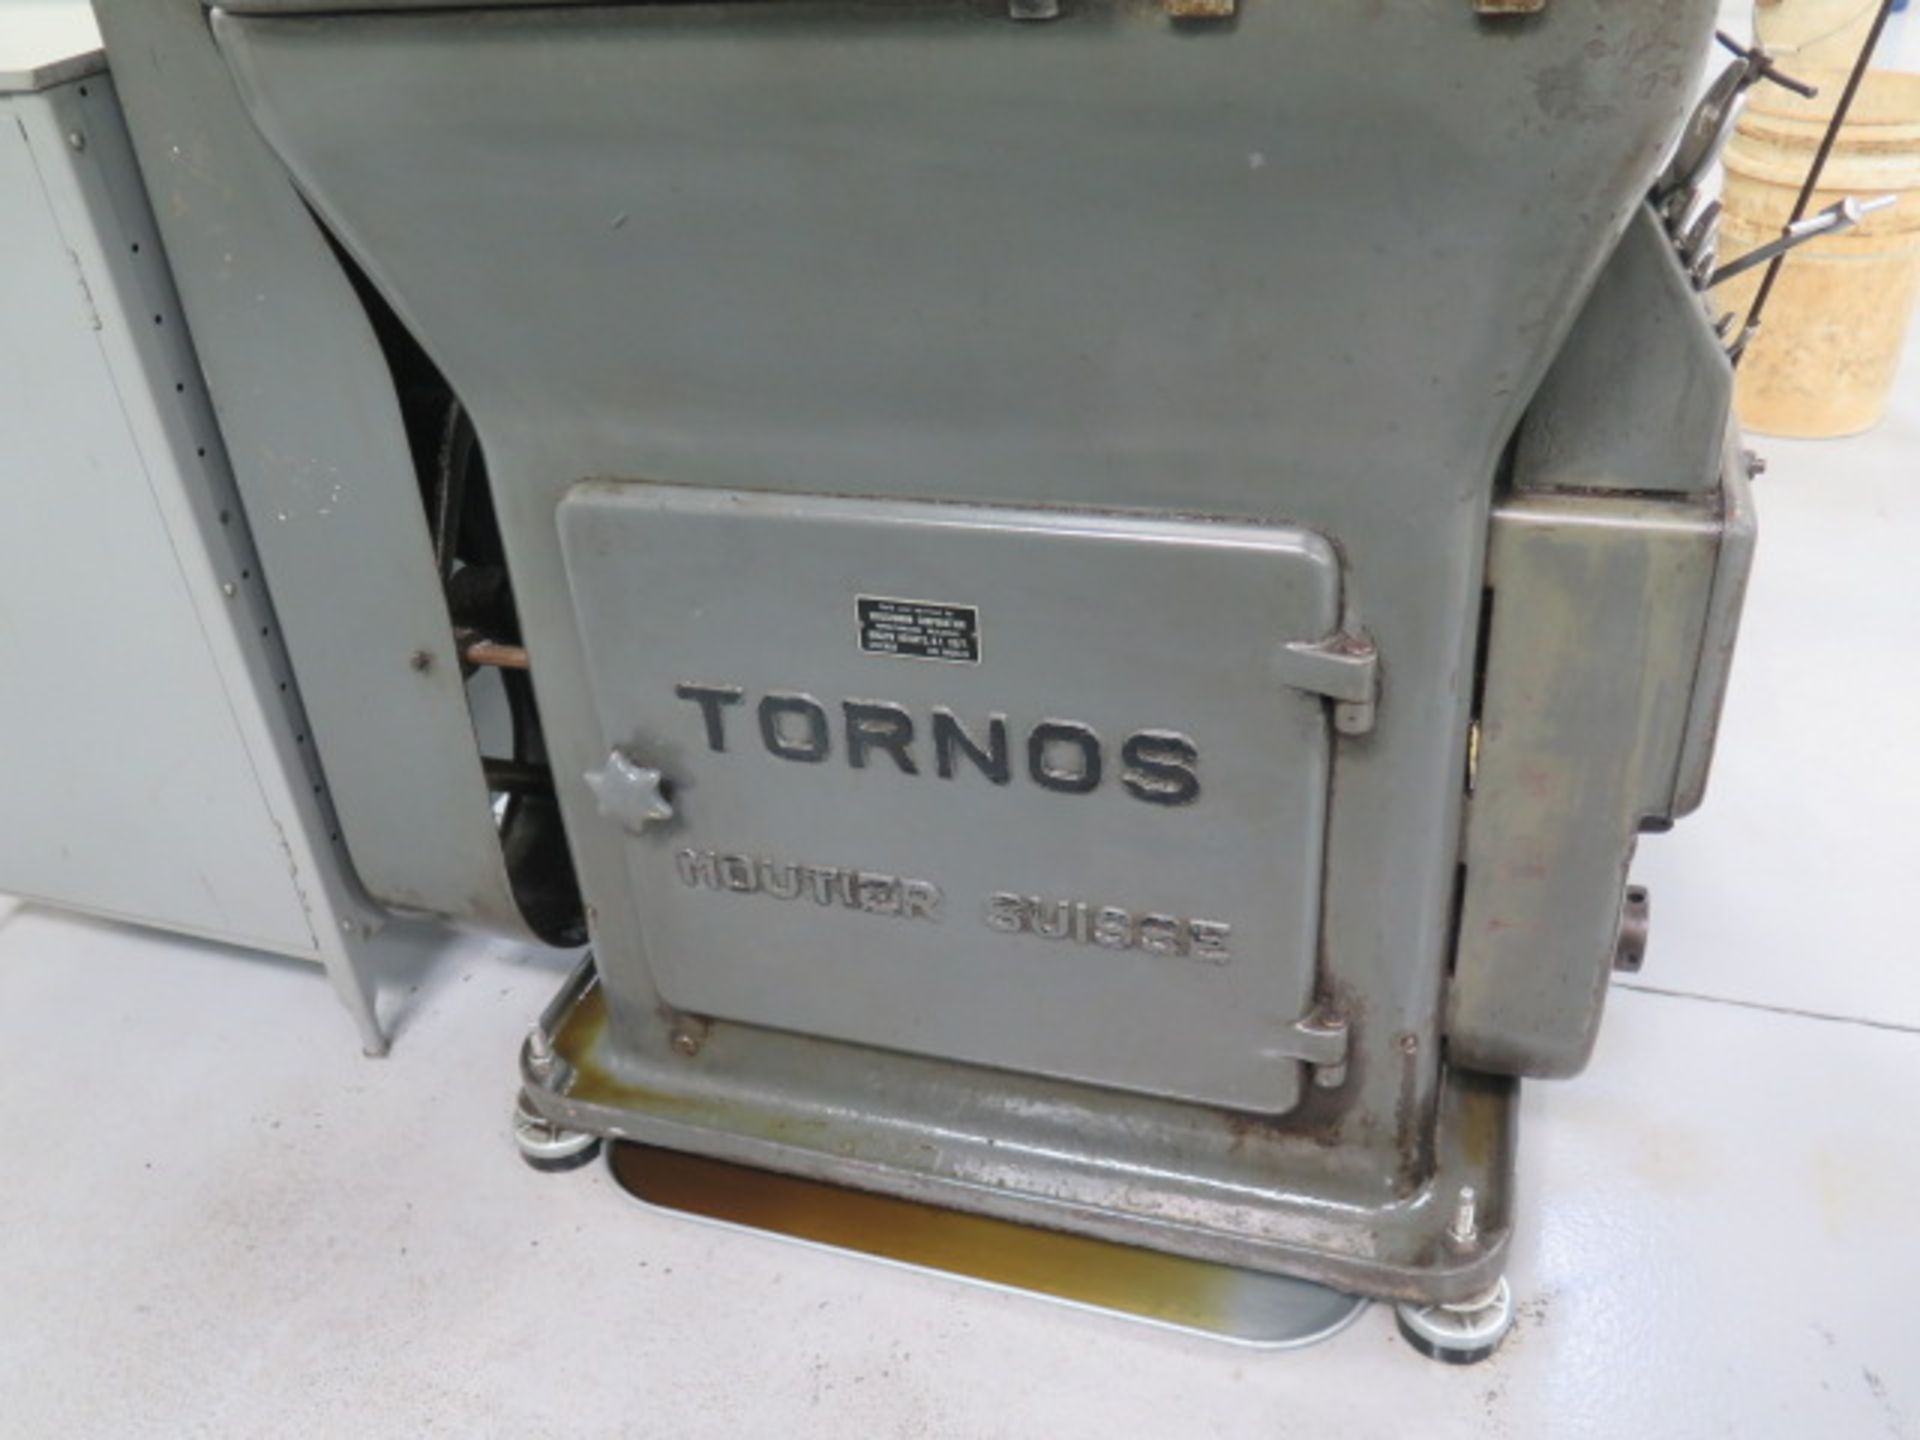 Tornos M7 7mm(.275”) Cap Automatic Screw Machine s/n 95764 w/ 5-Cross Slides, Bar Feed, Coolant - Image 4 of 9